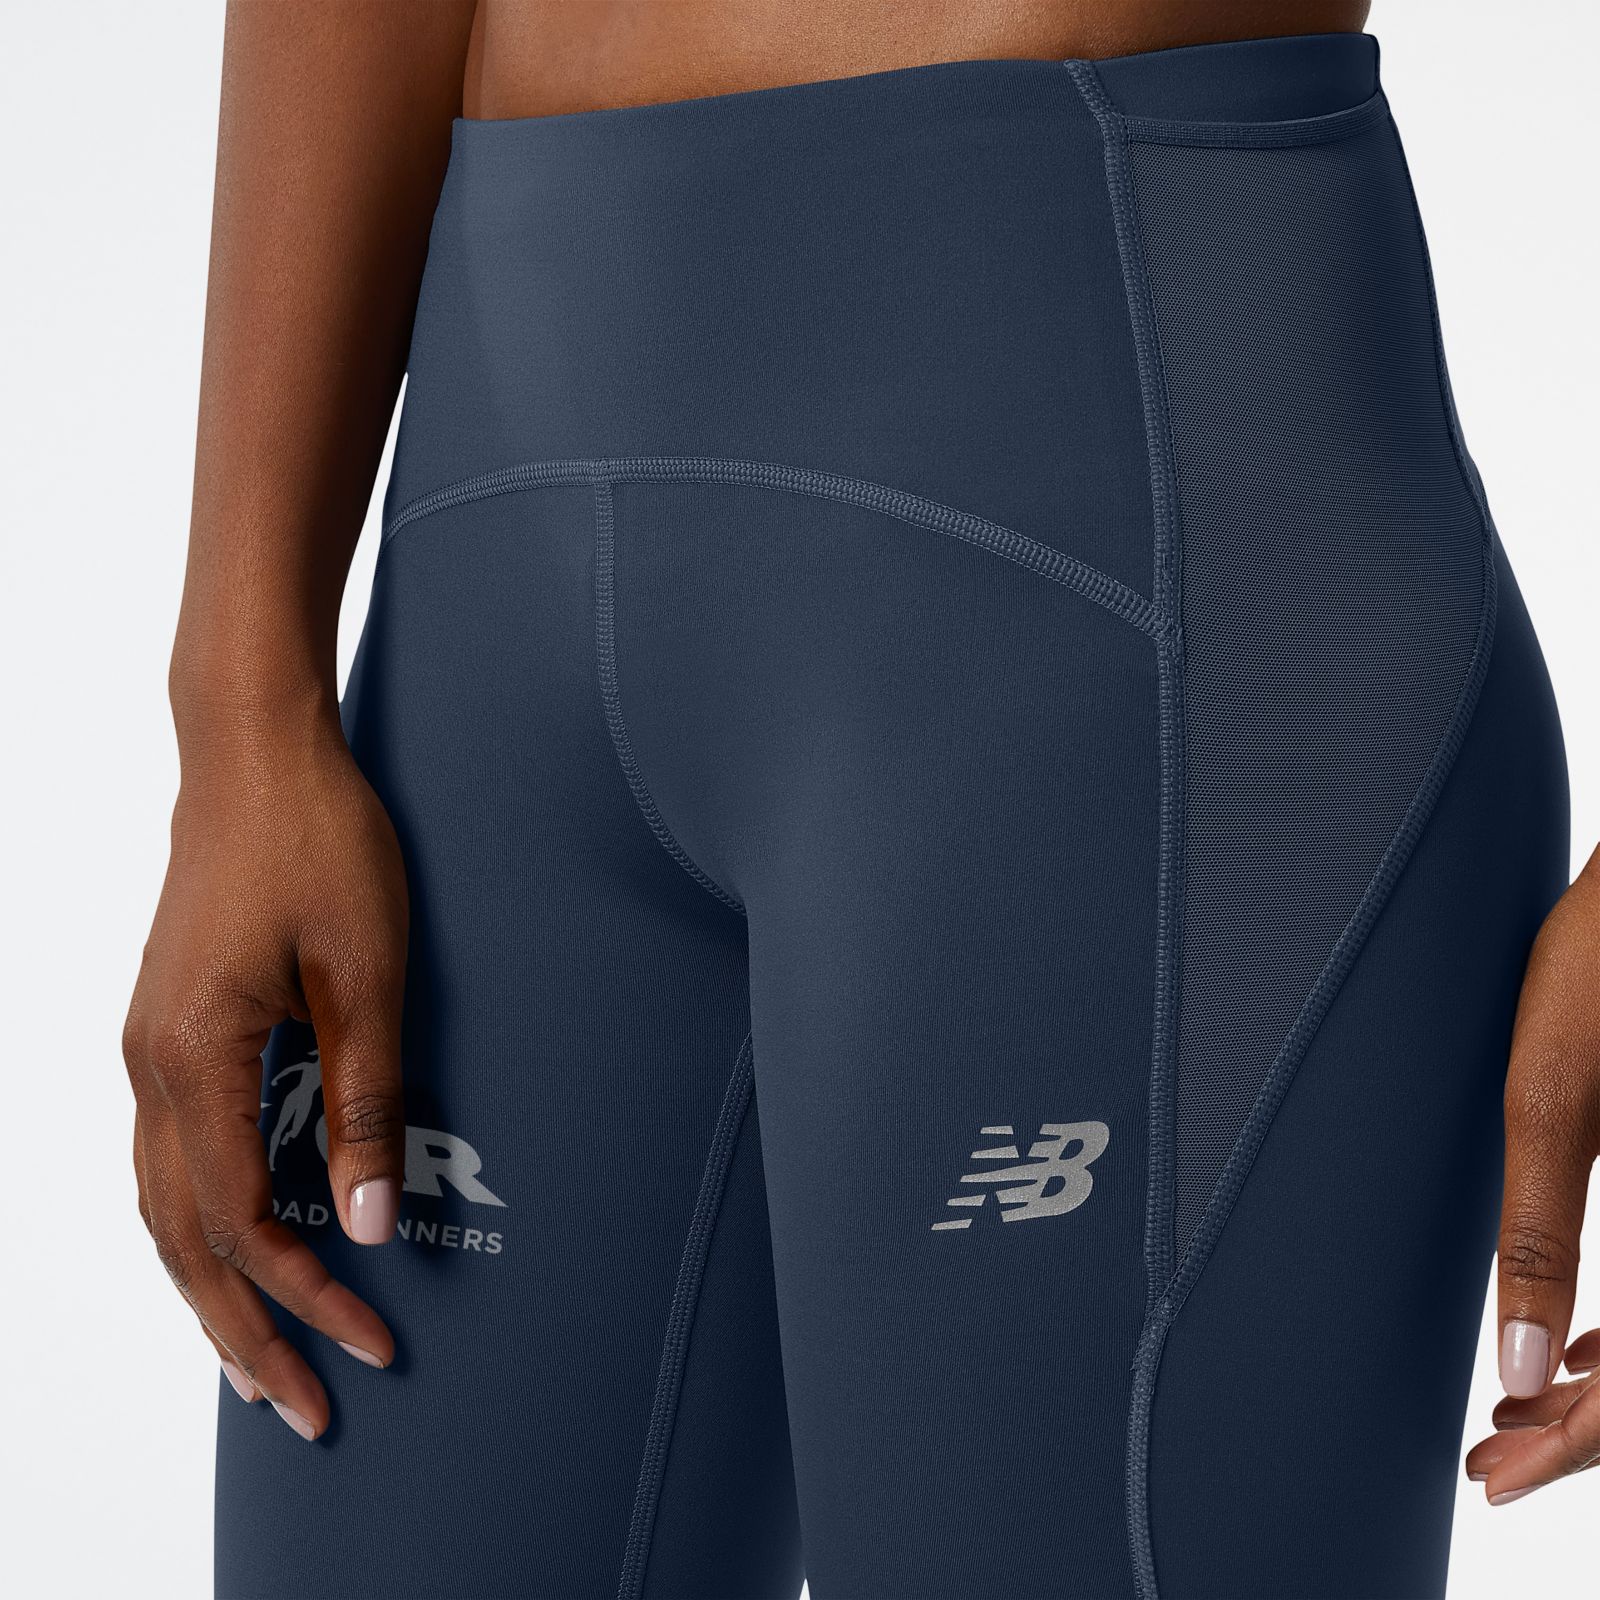 Buy New Balance Womens Sport Fashion Running Tight Leggings Black